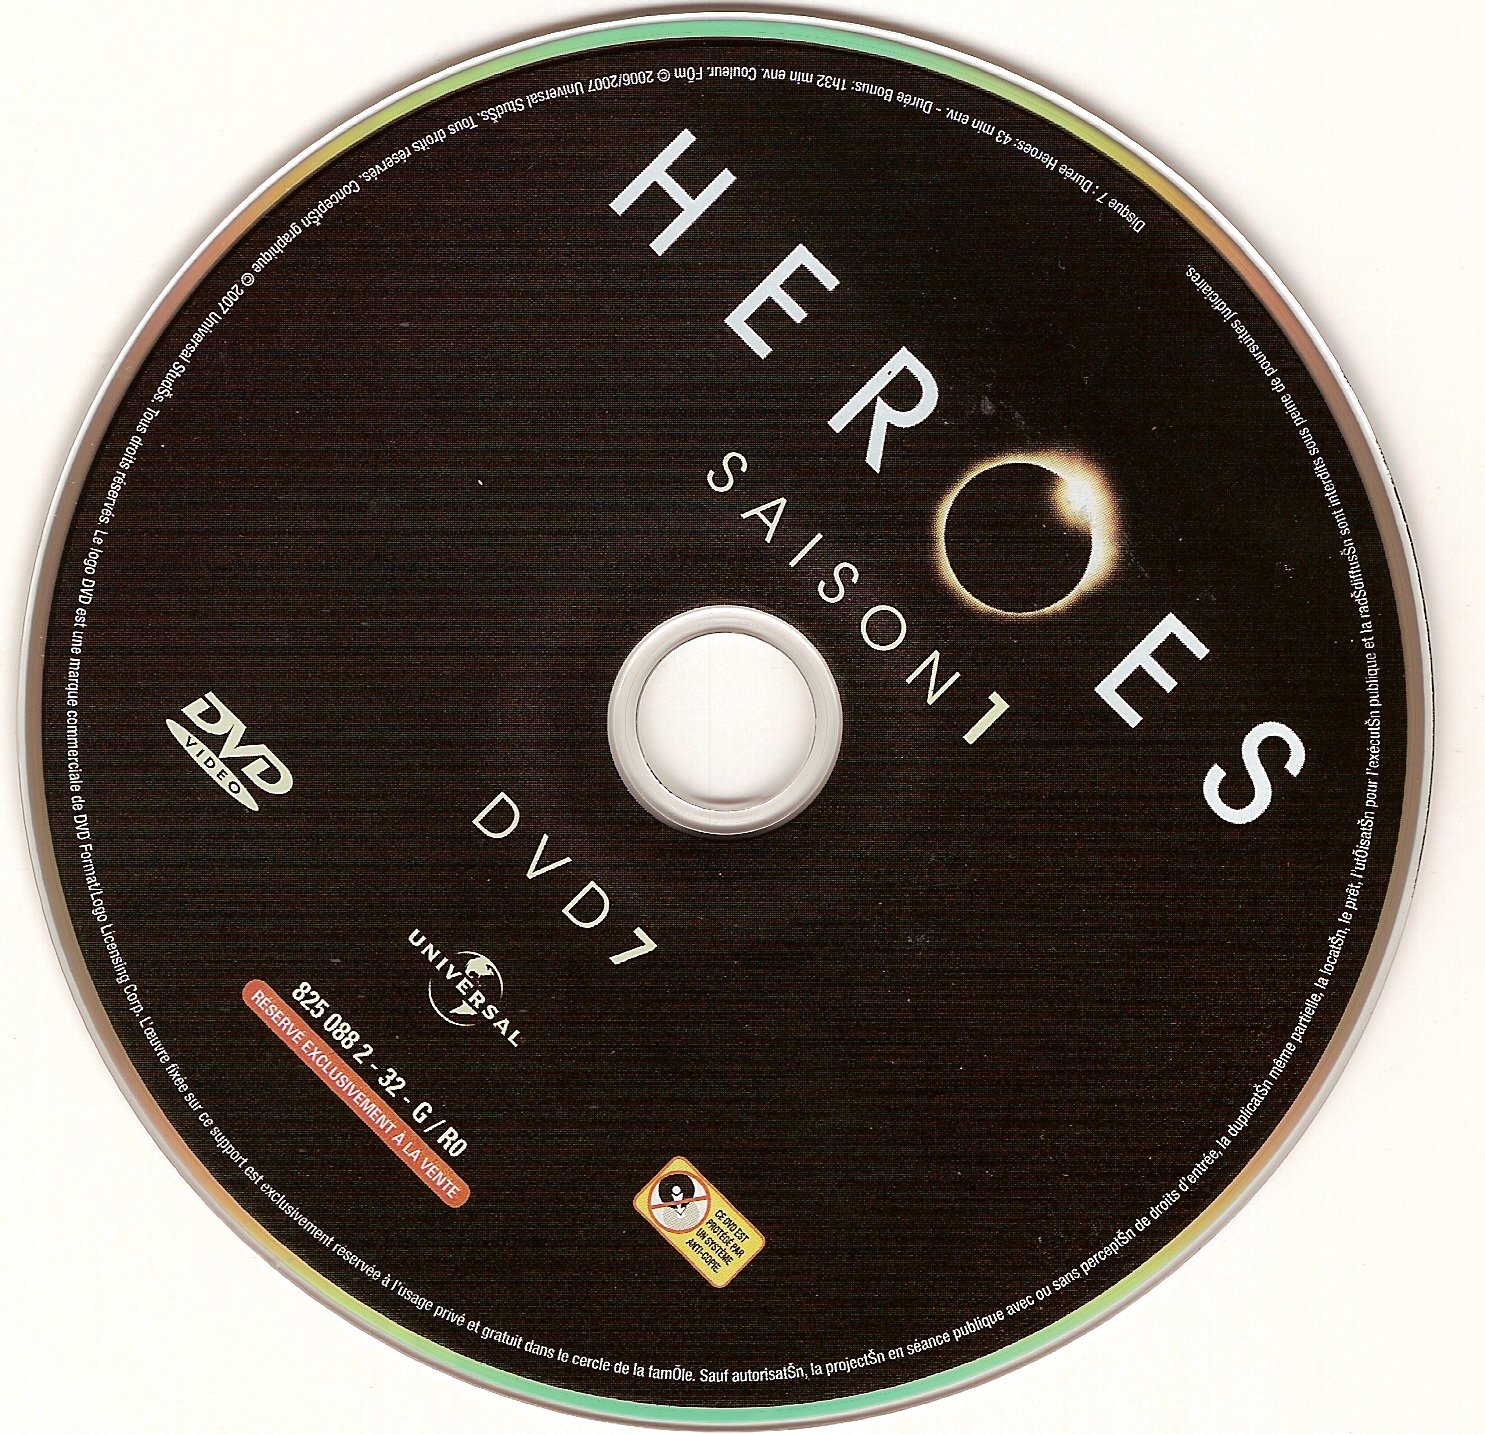 Heroes Saison 1 DISC 7